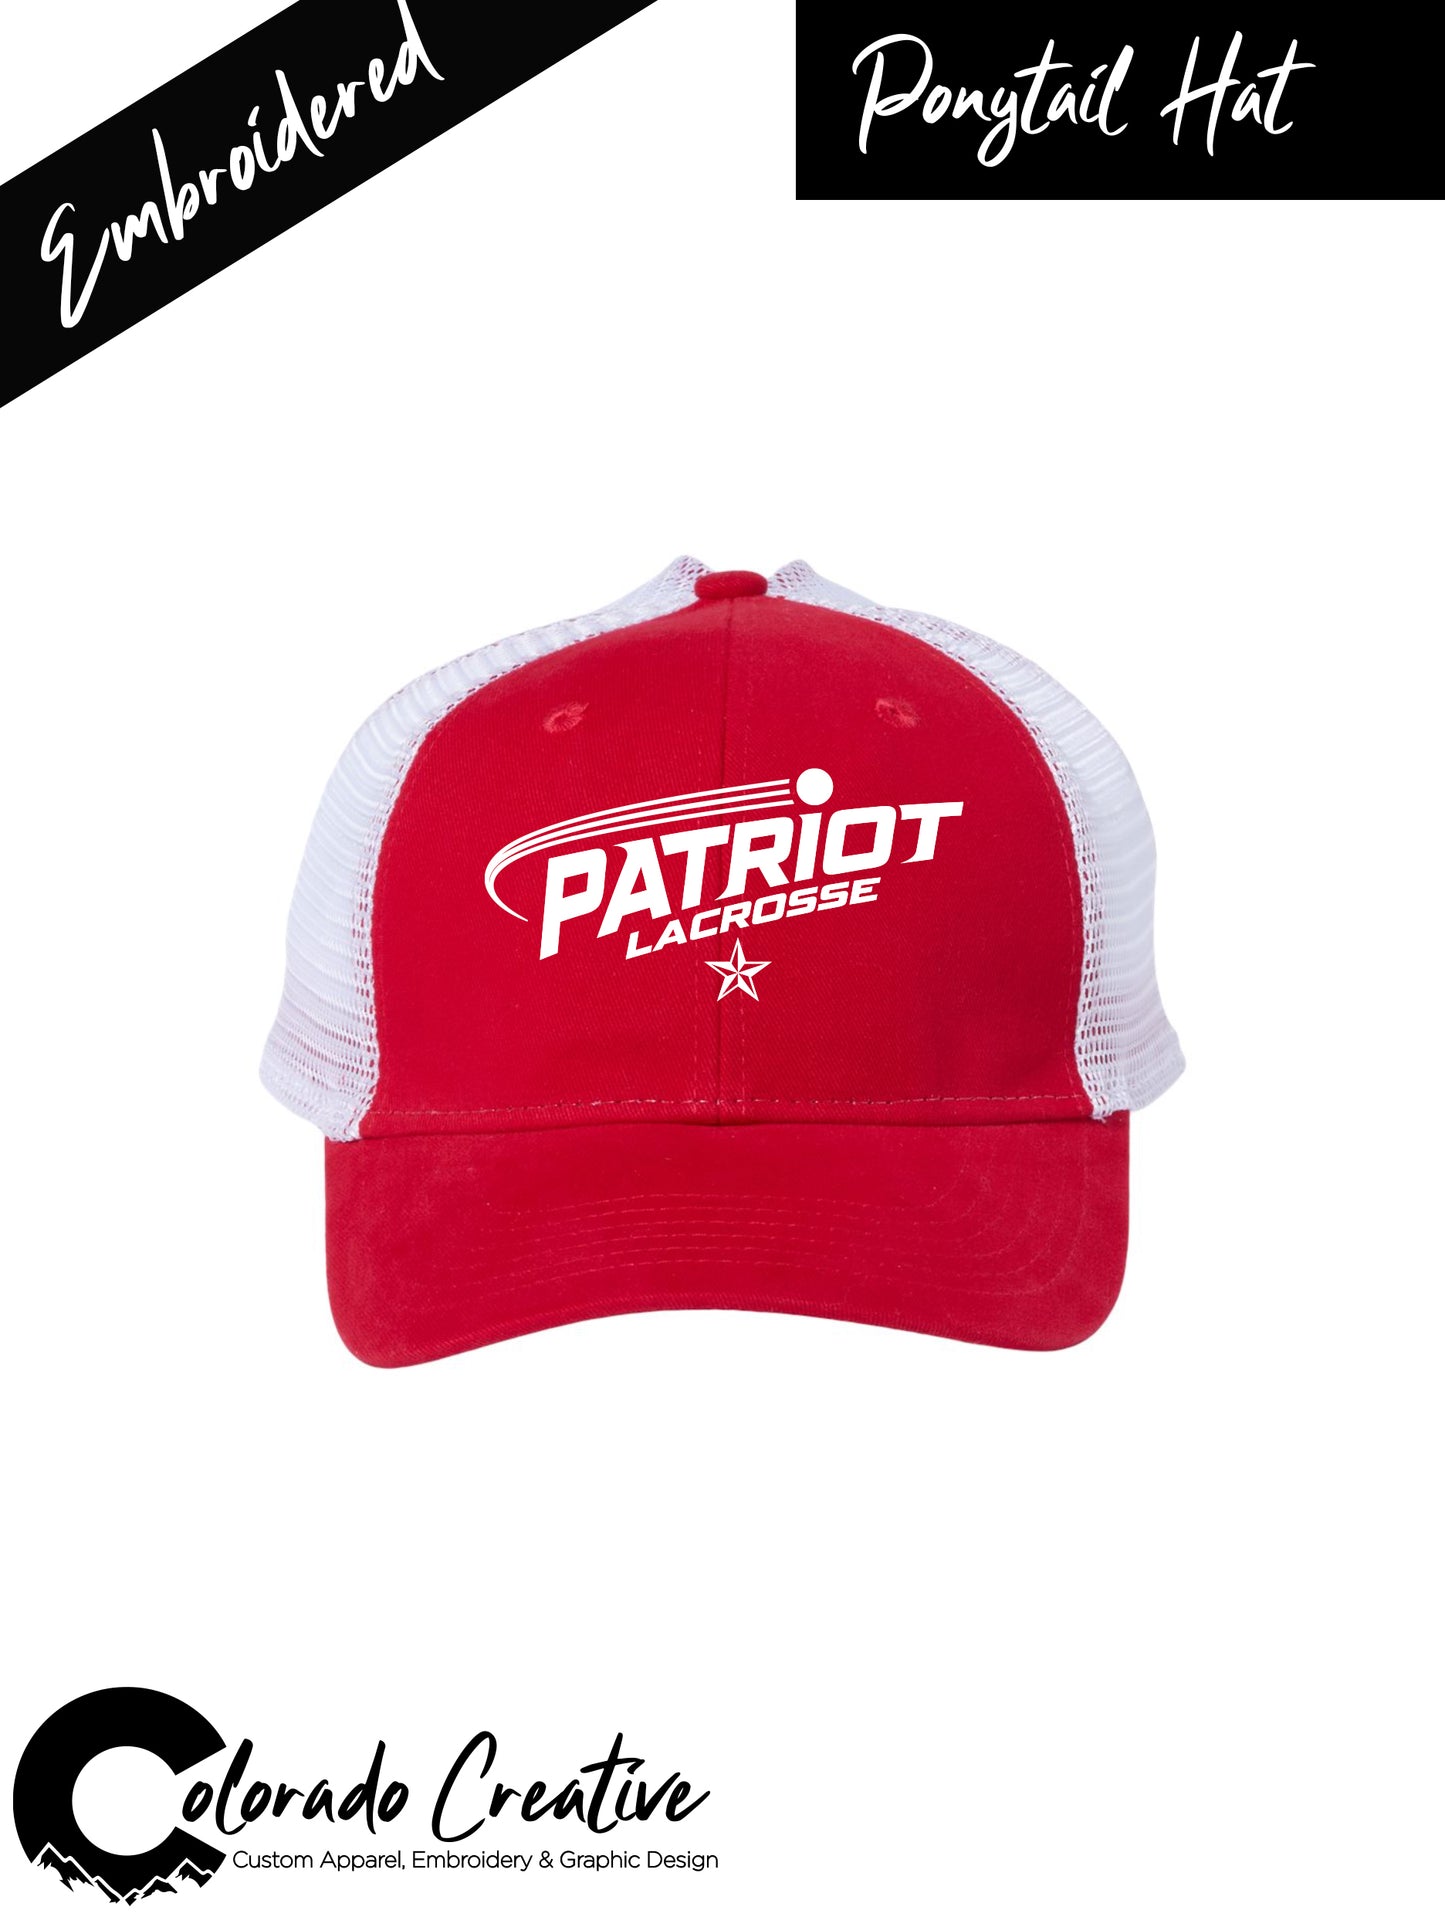 Patriots Women's Ponytail Cap